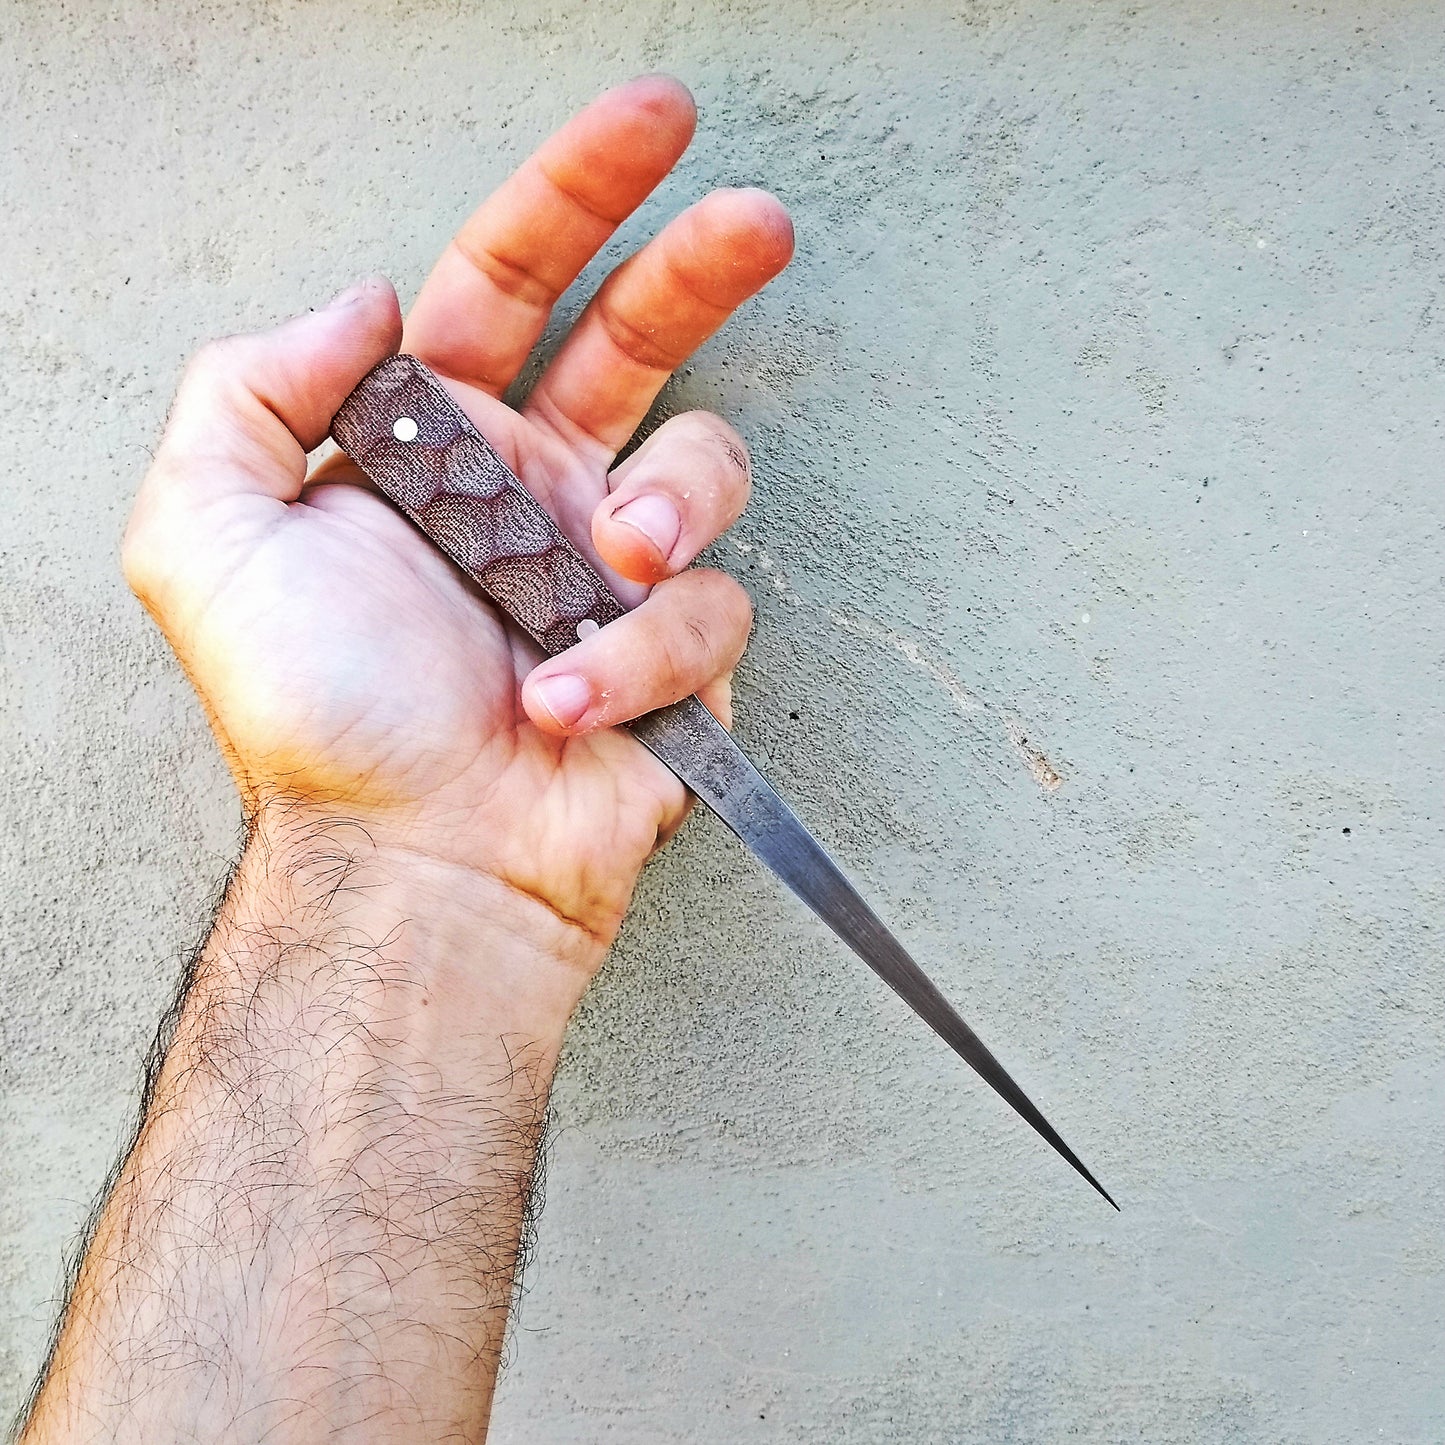 Bladetricks custom Ice Pry dagger edc tool knife maker Nash micarta handle